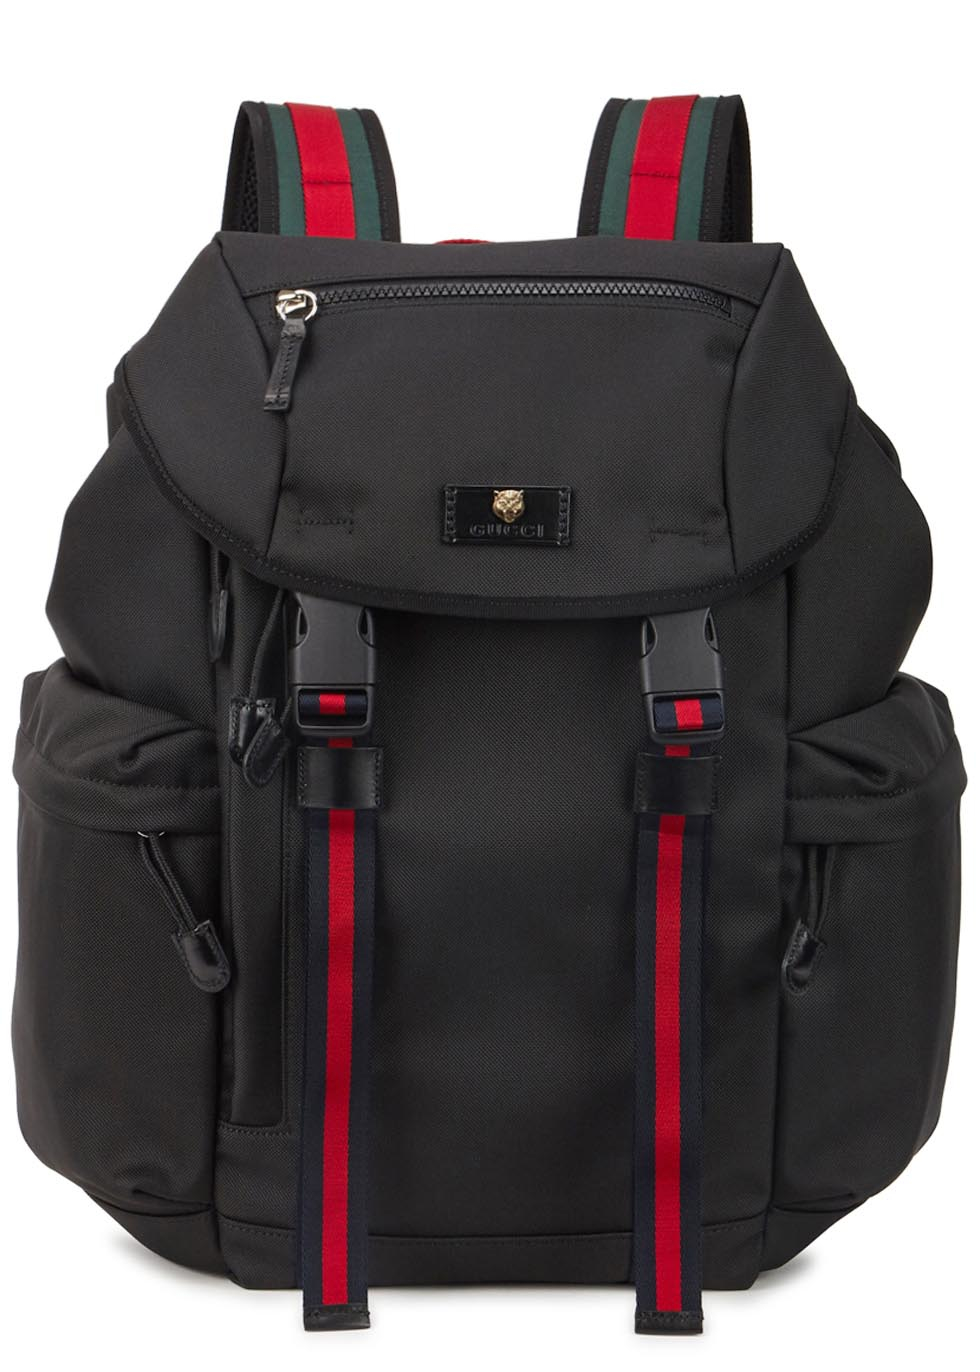 Gucci Black Canvas Backpack in Black for Men - Lyst